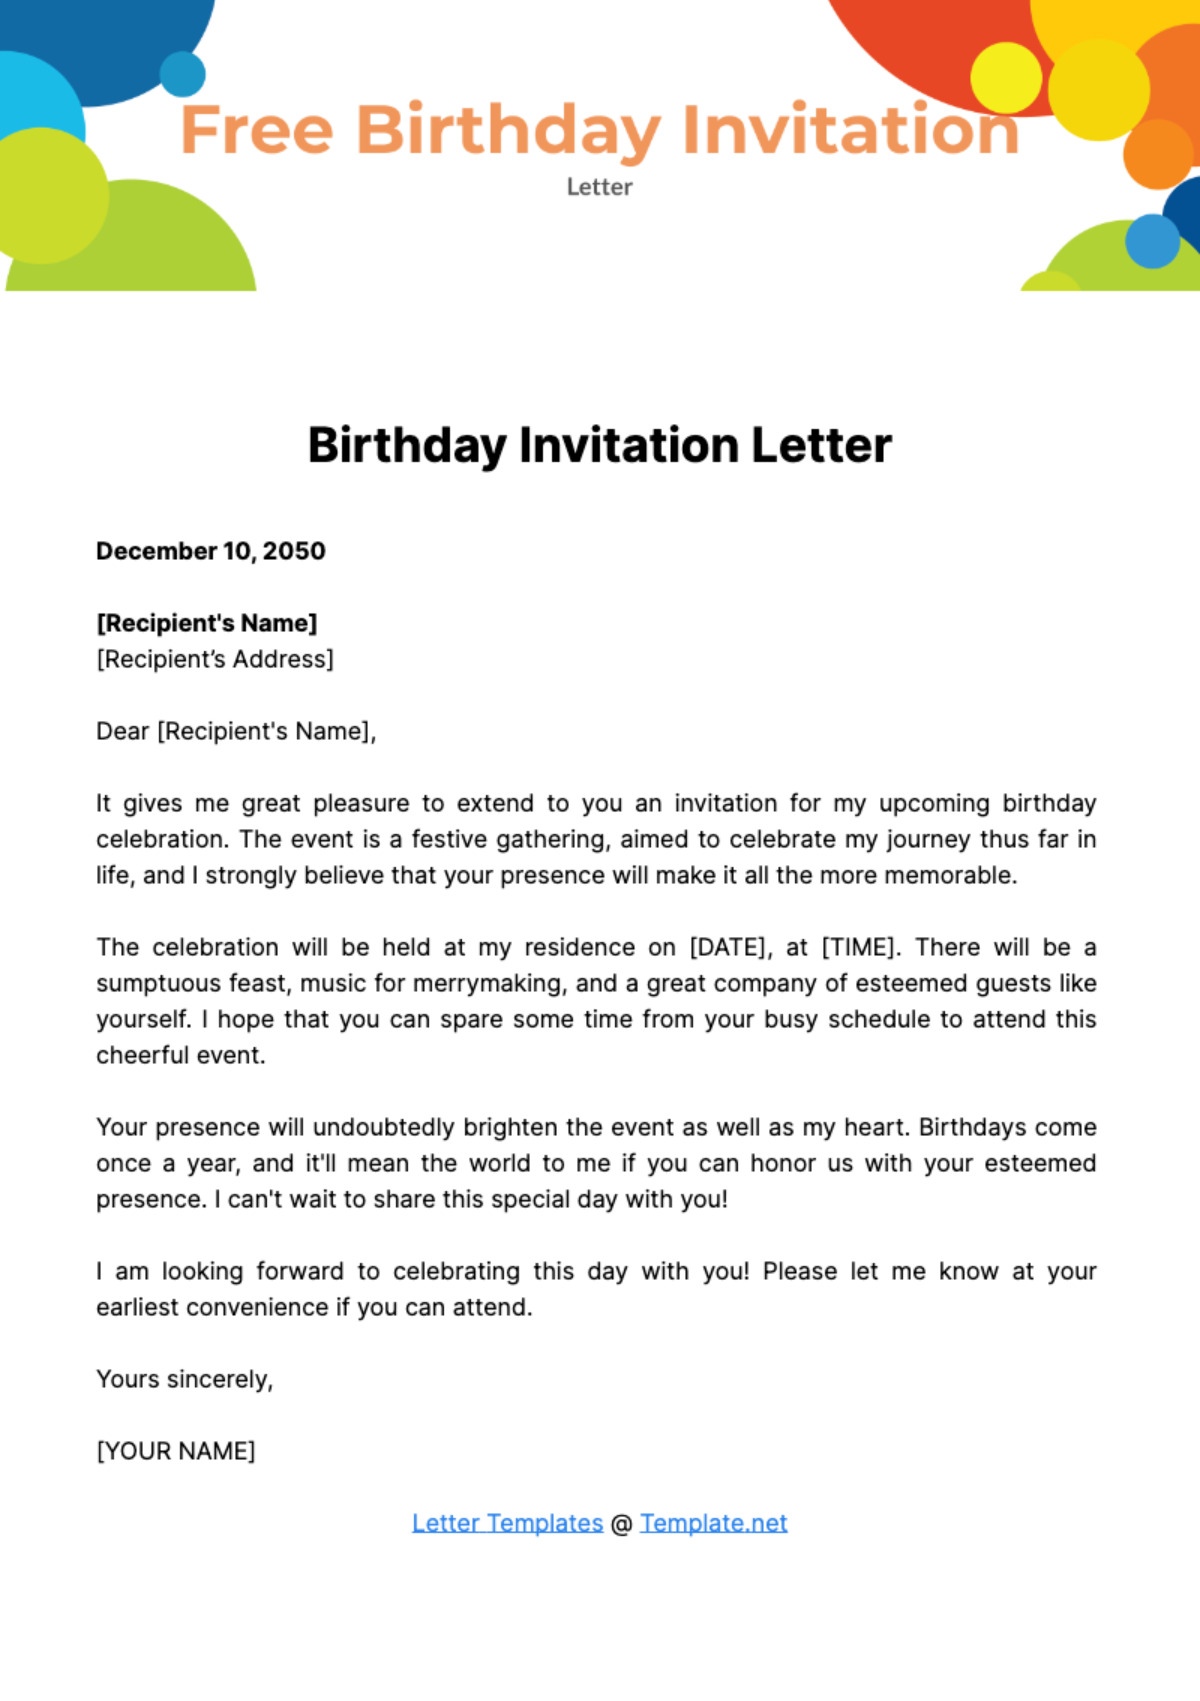 Free Birthday Invitation Letter Template